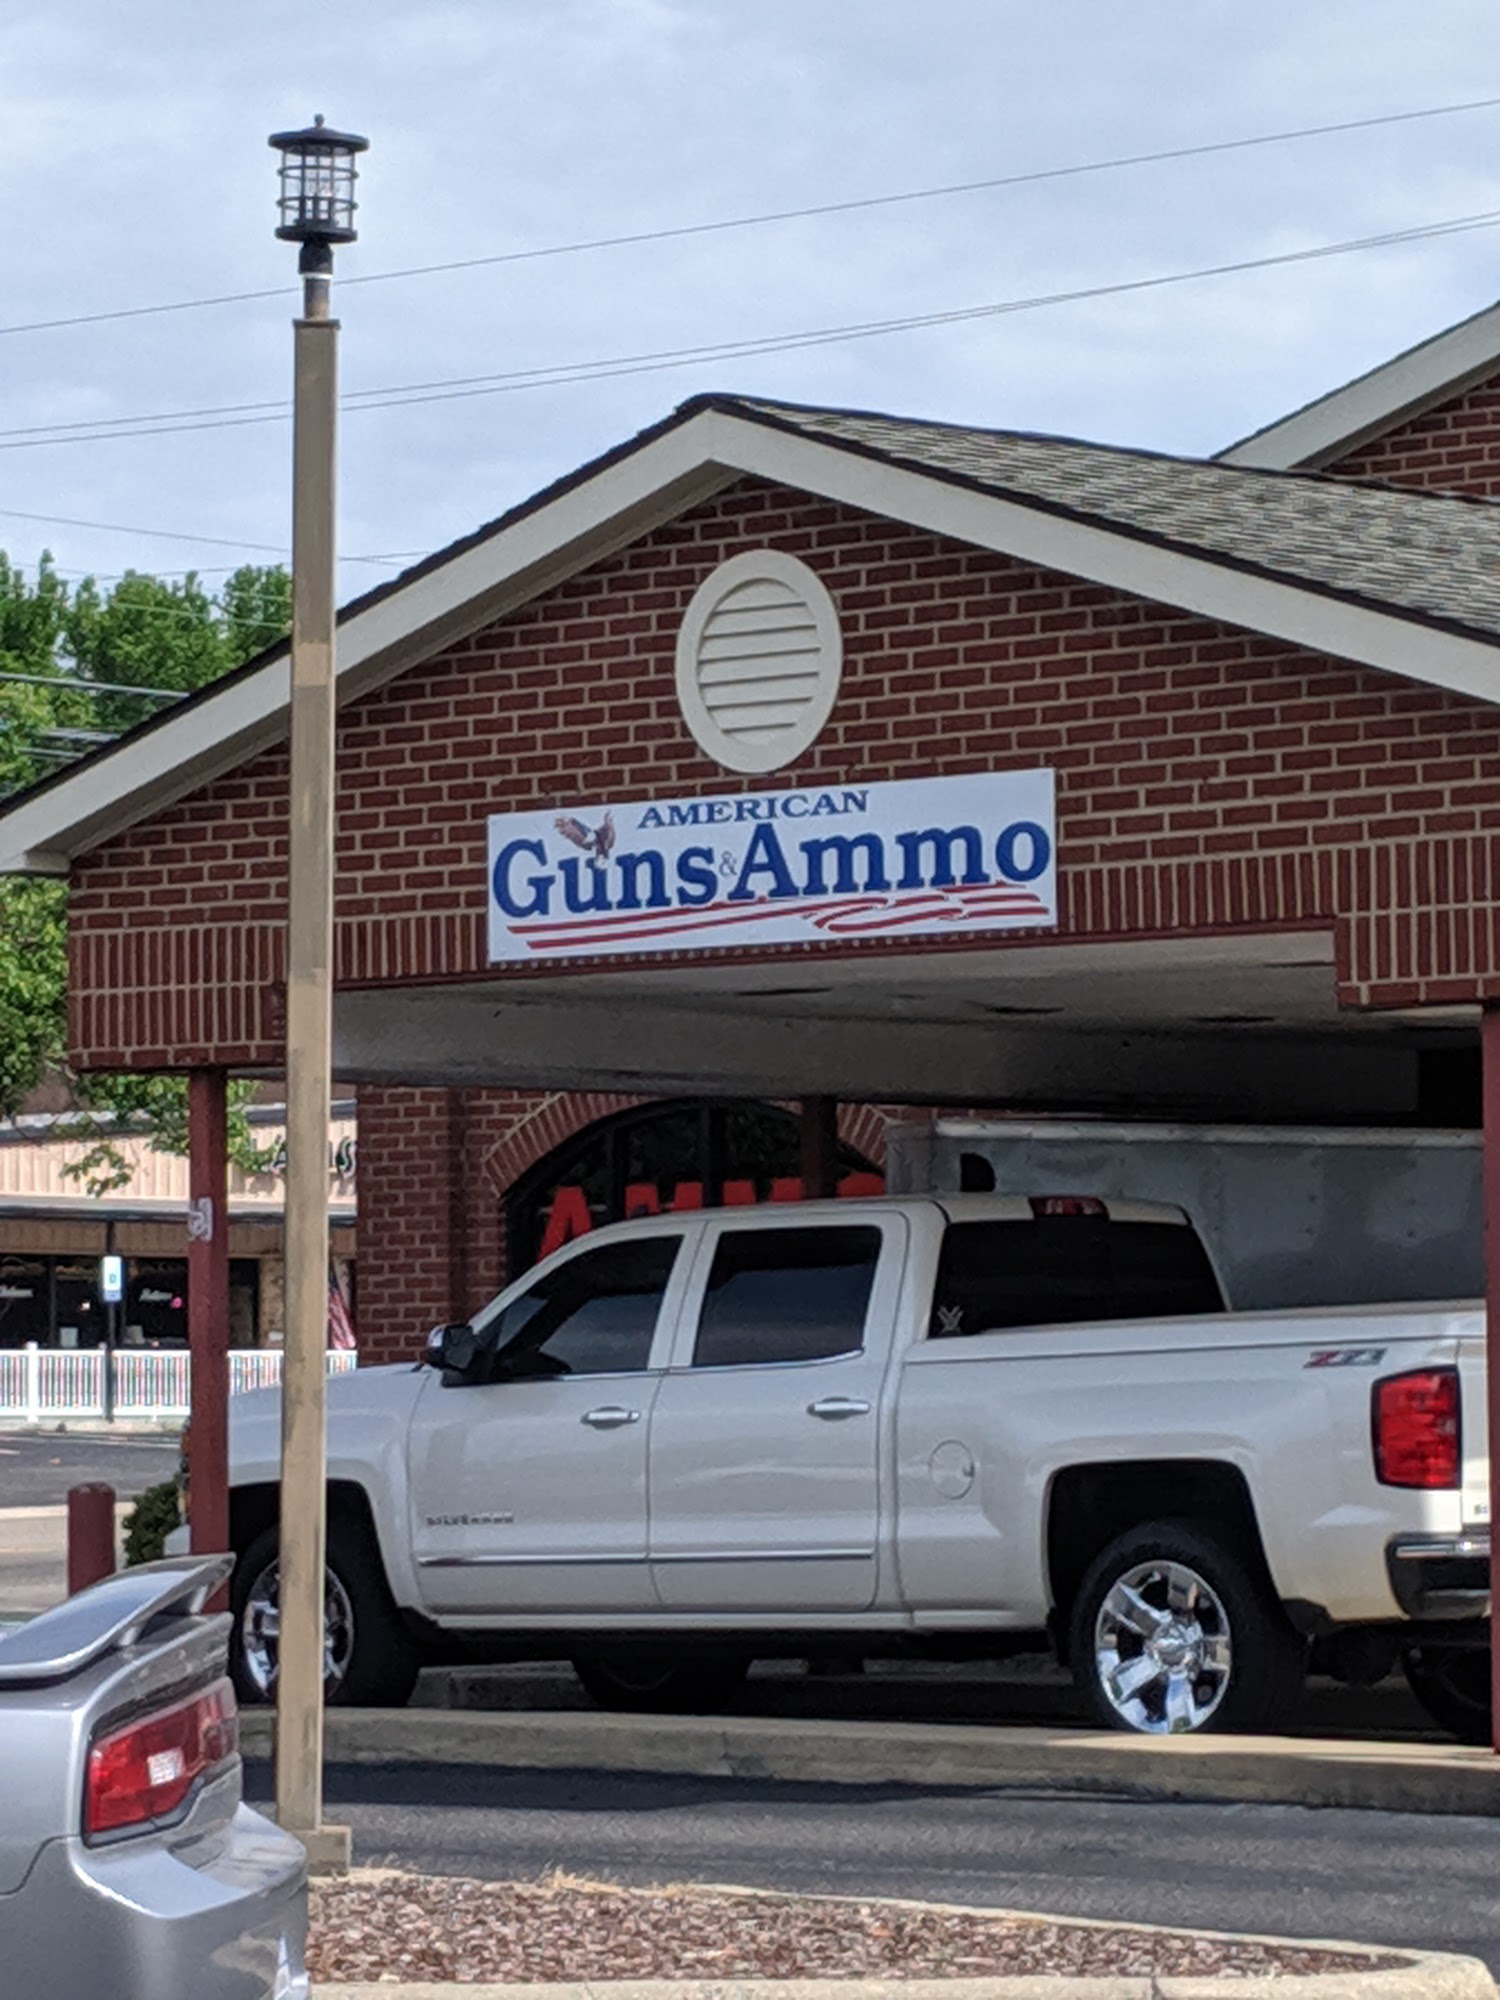 AMERICAN GUNS & AMMO